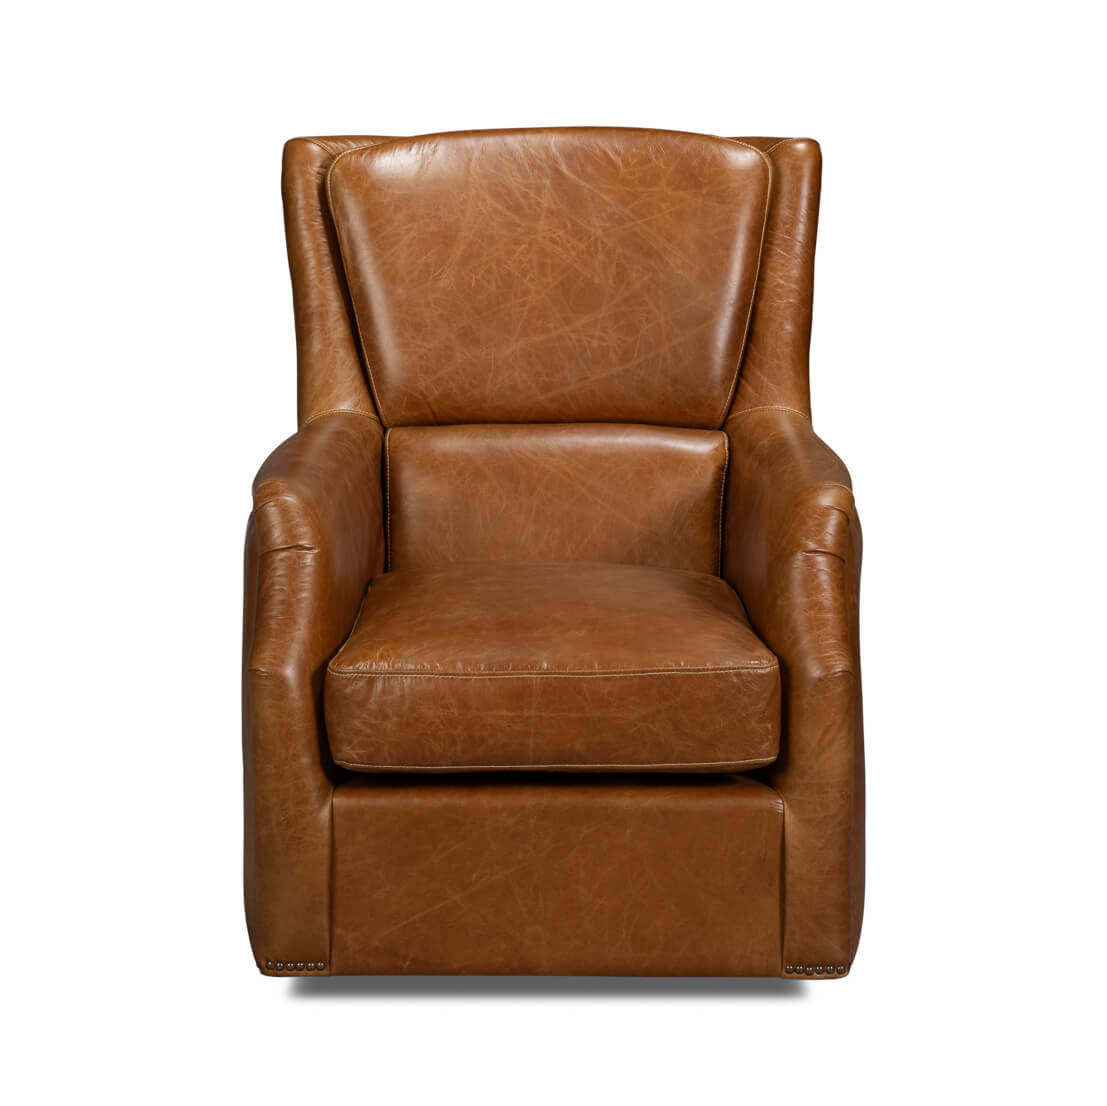 Traditional Brown Leather Swivel Chair - English Georgian America